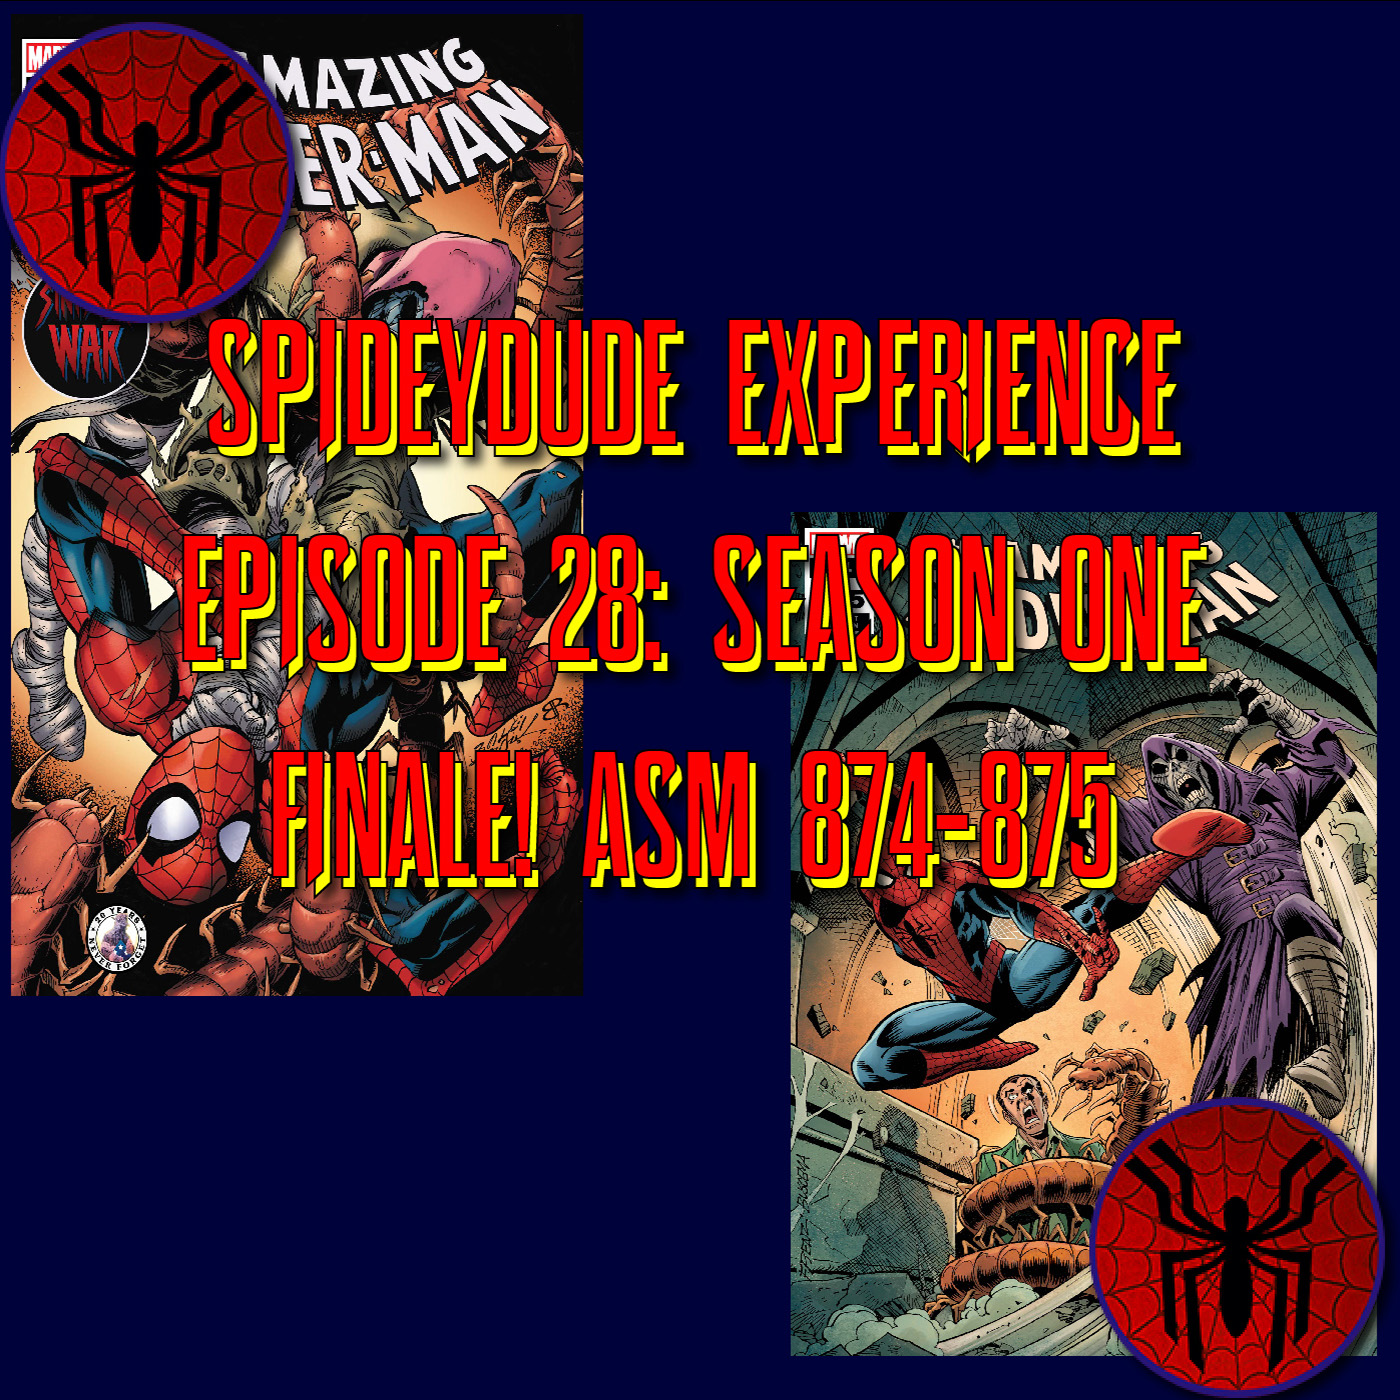 Spideydude Experience Episode 28 Audio Edition: Season 1 Finale, ASM 874-875 Review